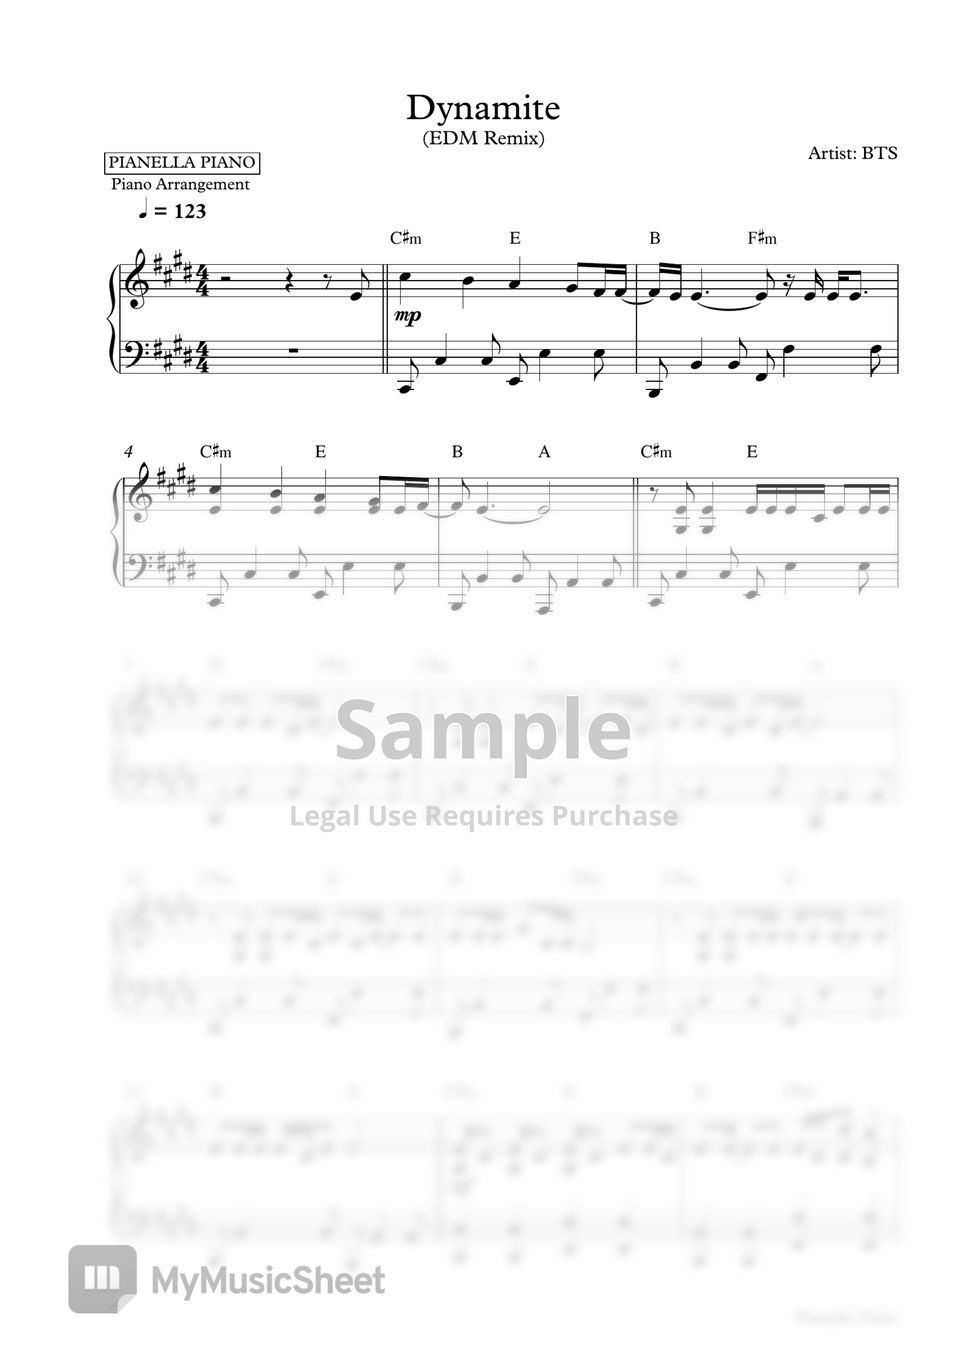 BTS - DYNAMITE EDM Remix (Piano Sheet + Drum Backing Track) by Pianella Piano